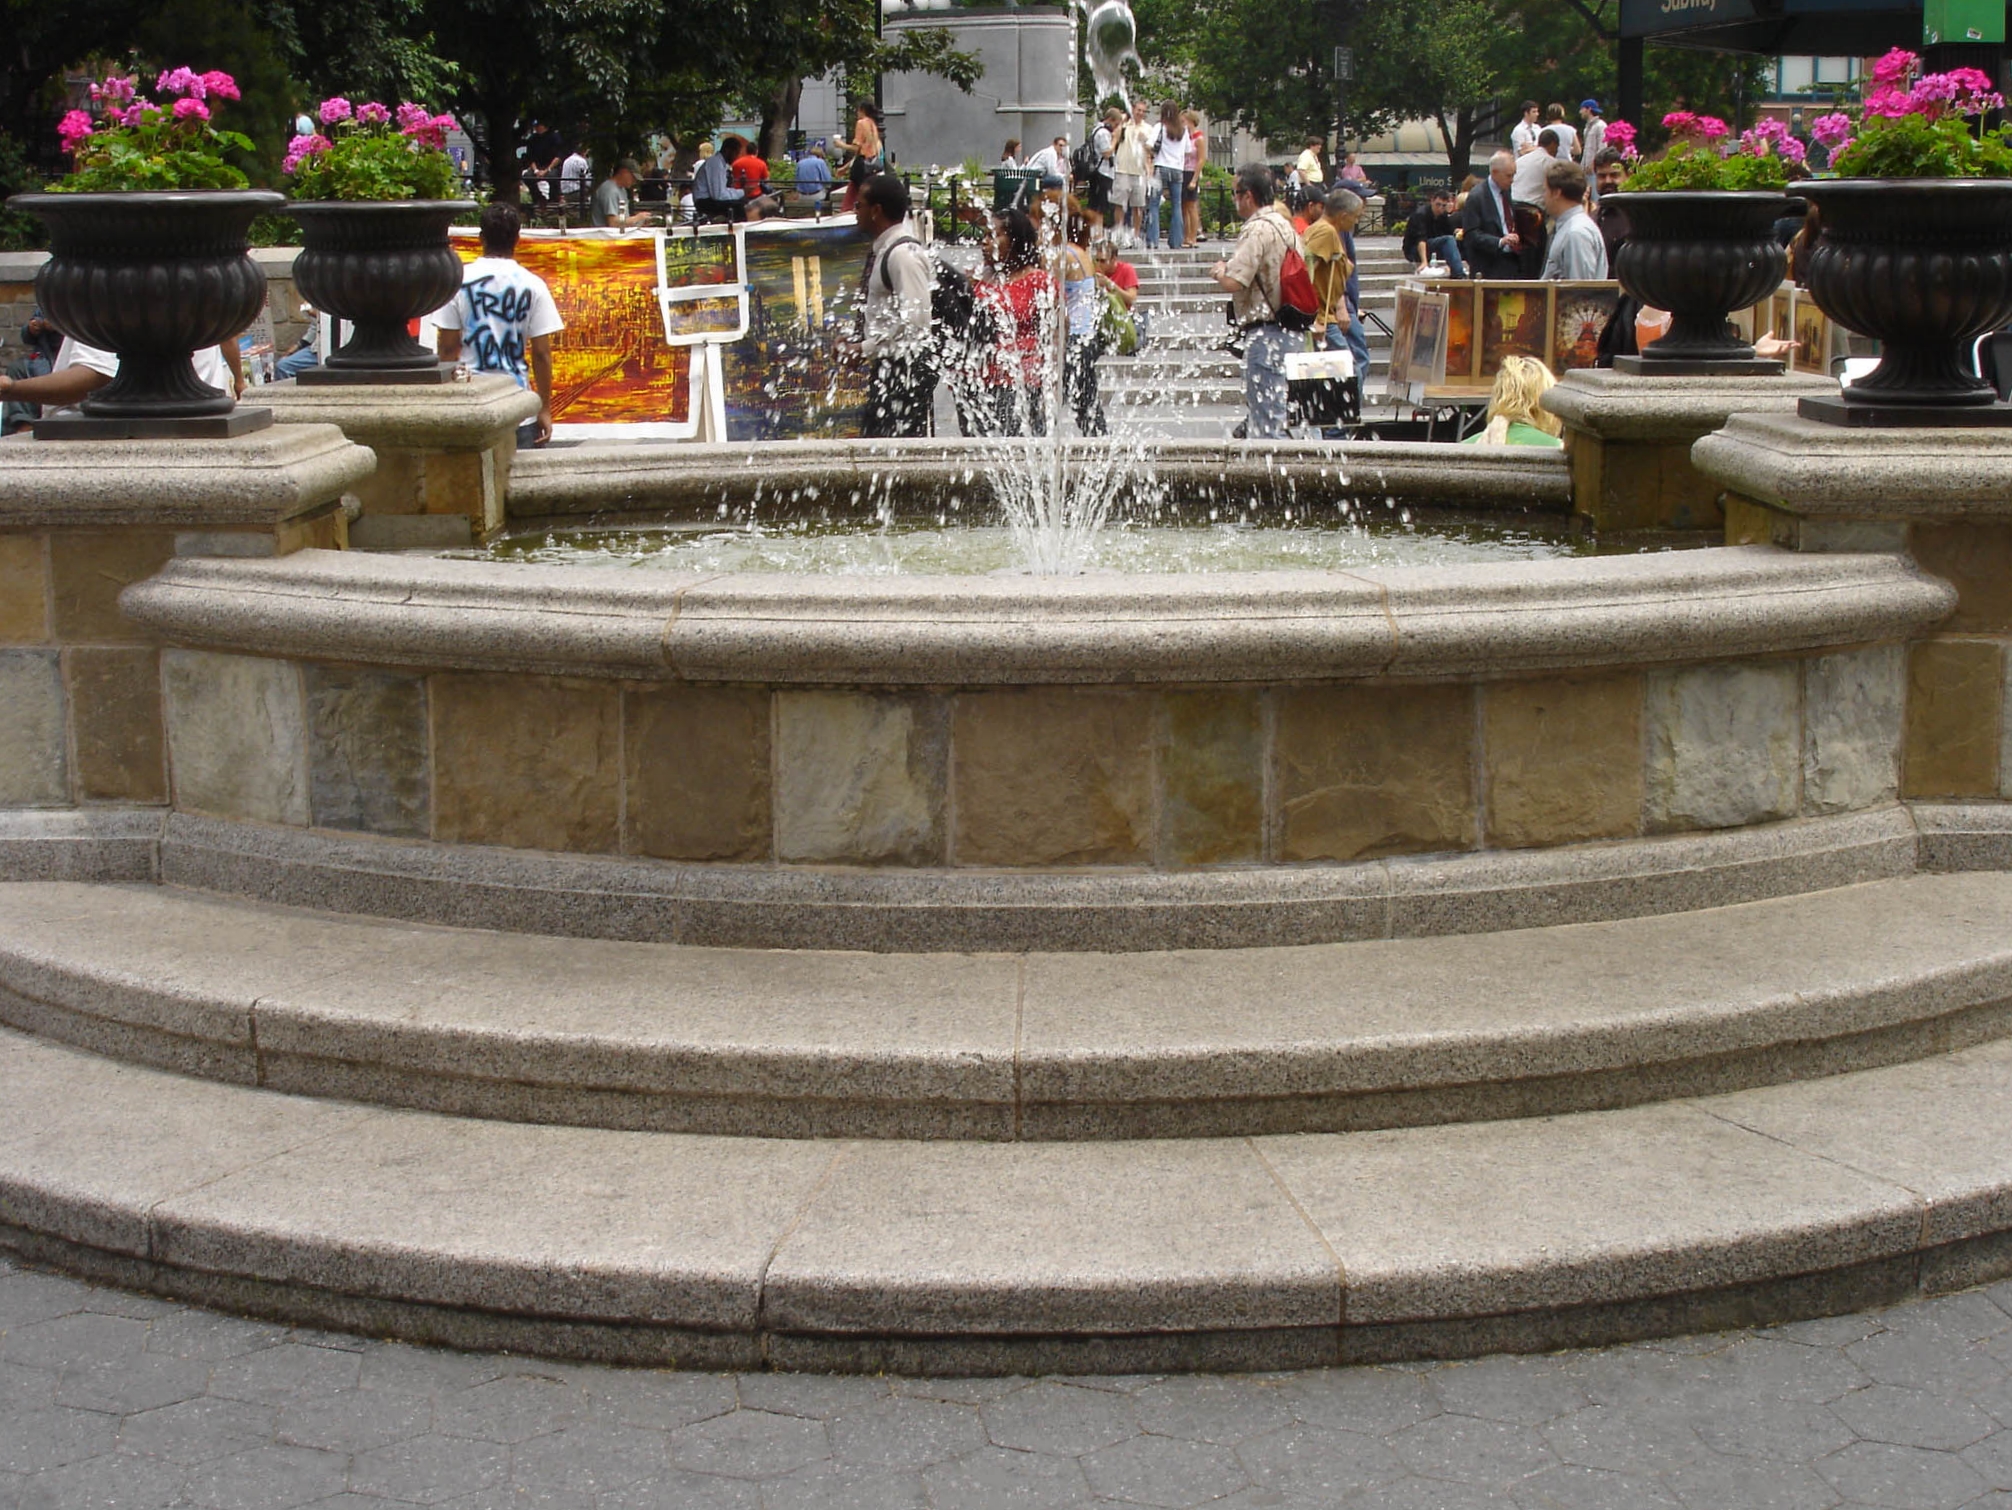 Union Square Park, Manhattan NY